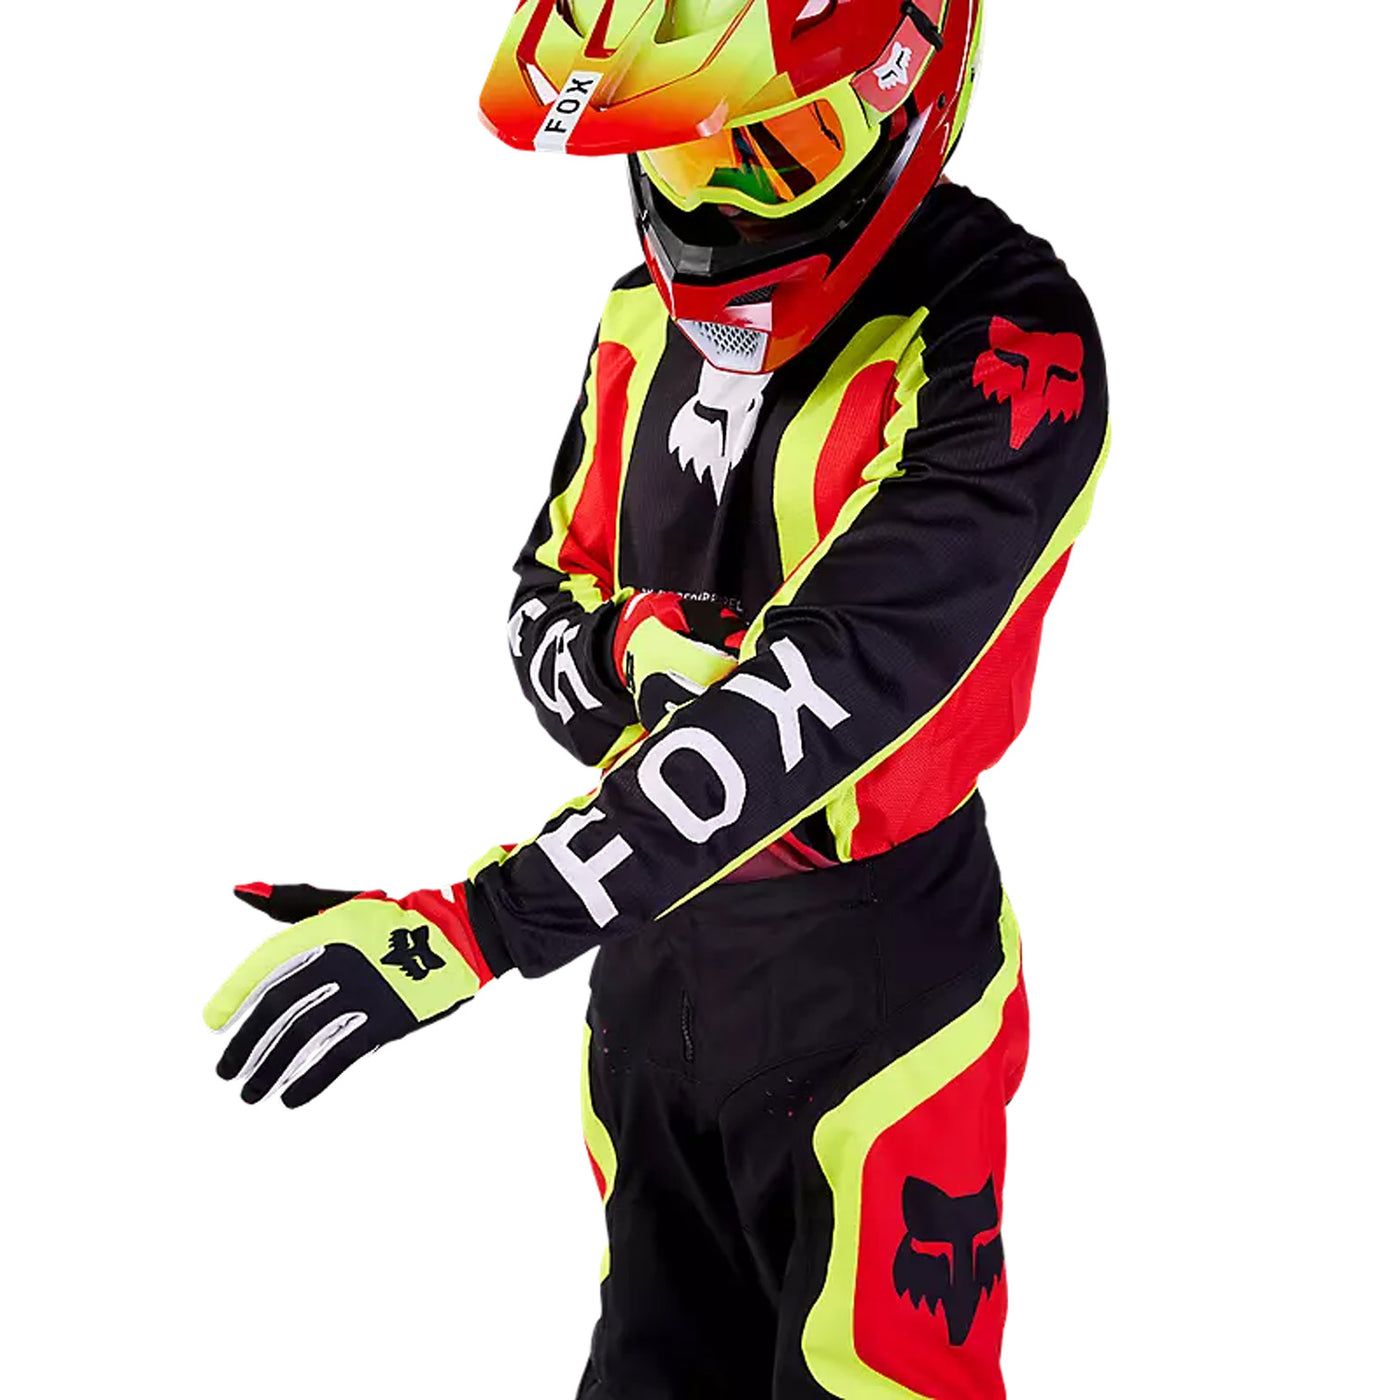 studio photo of dirt rider in red/yellow Fox Racing 180 Ballast Gear